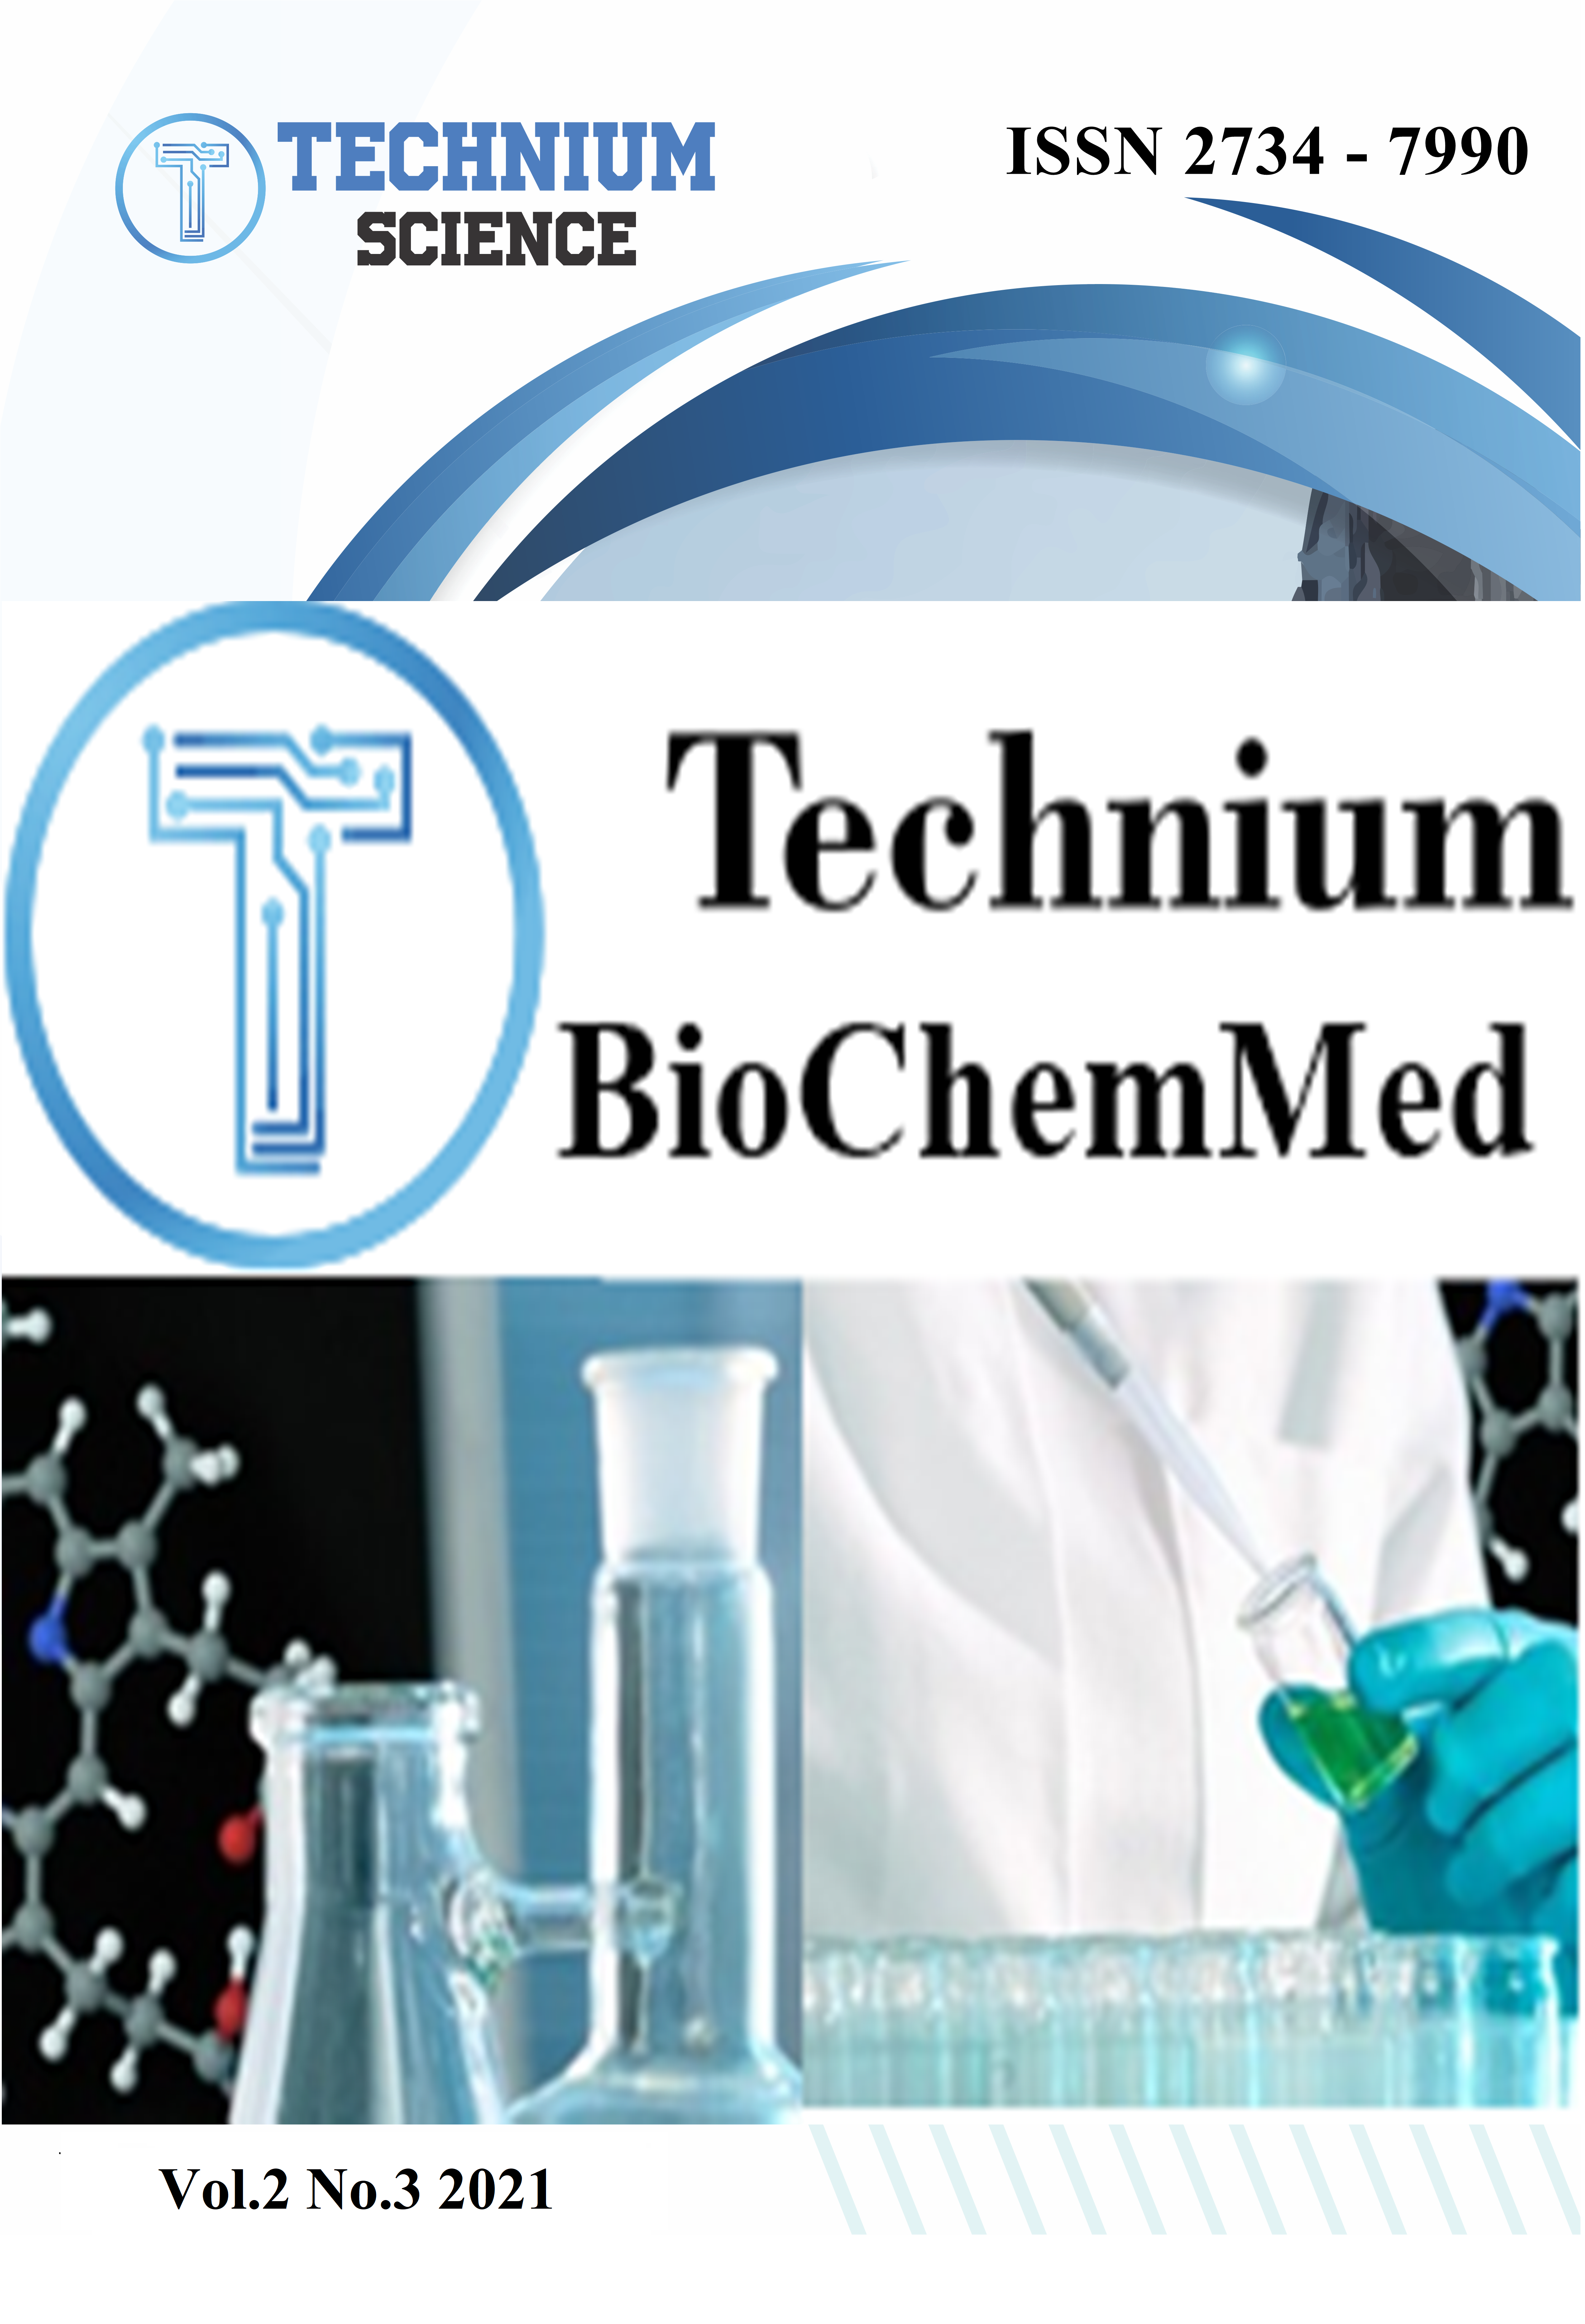 					View Vol. 2 No. 3 (2021): Technium BioChemMed
				